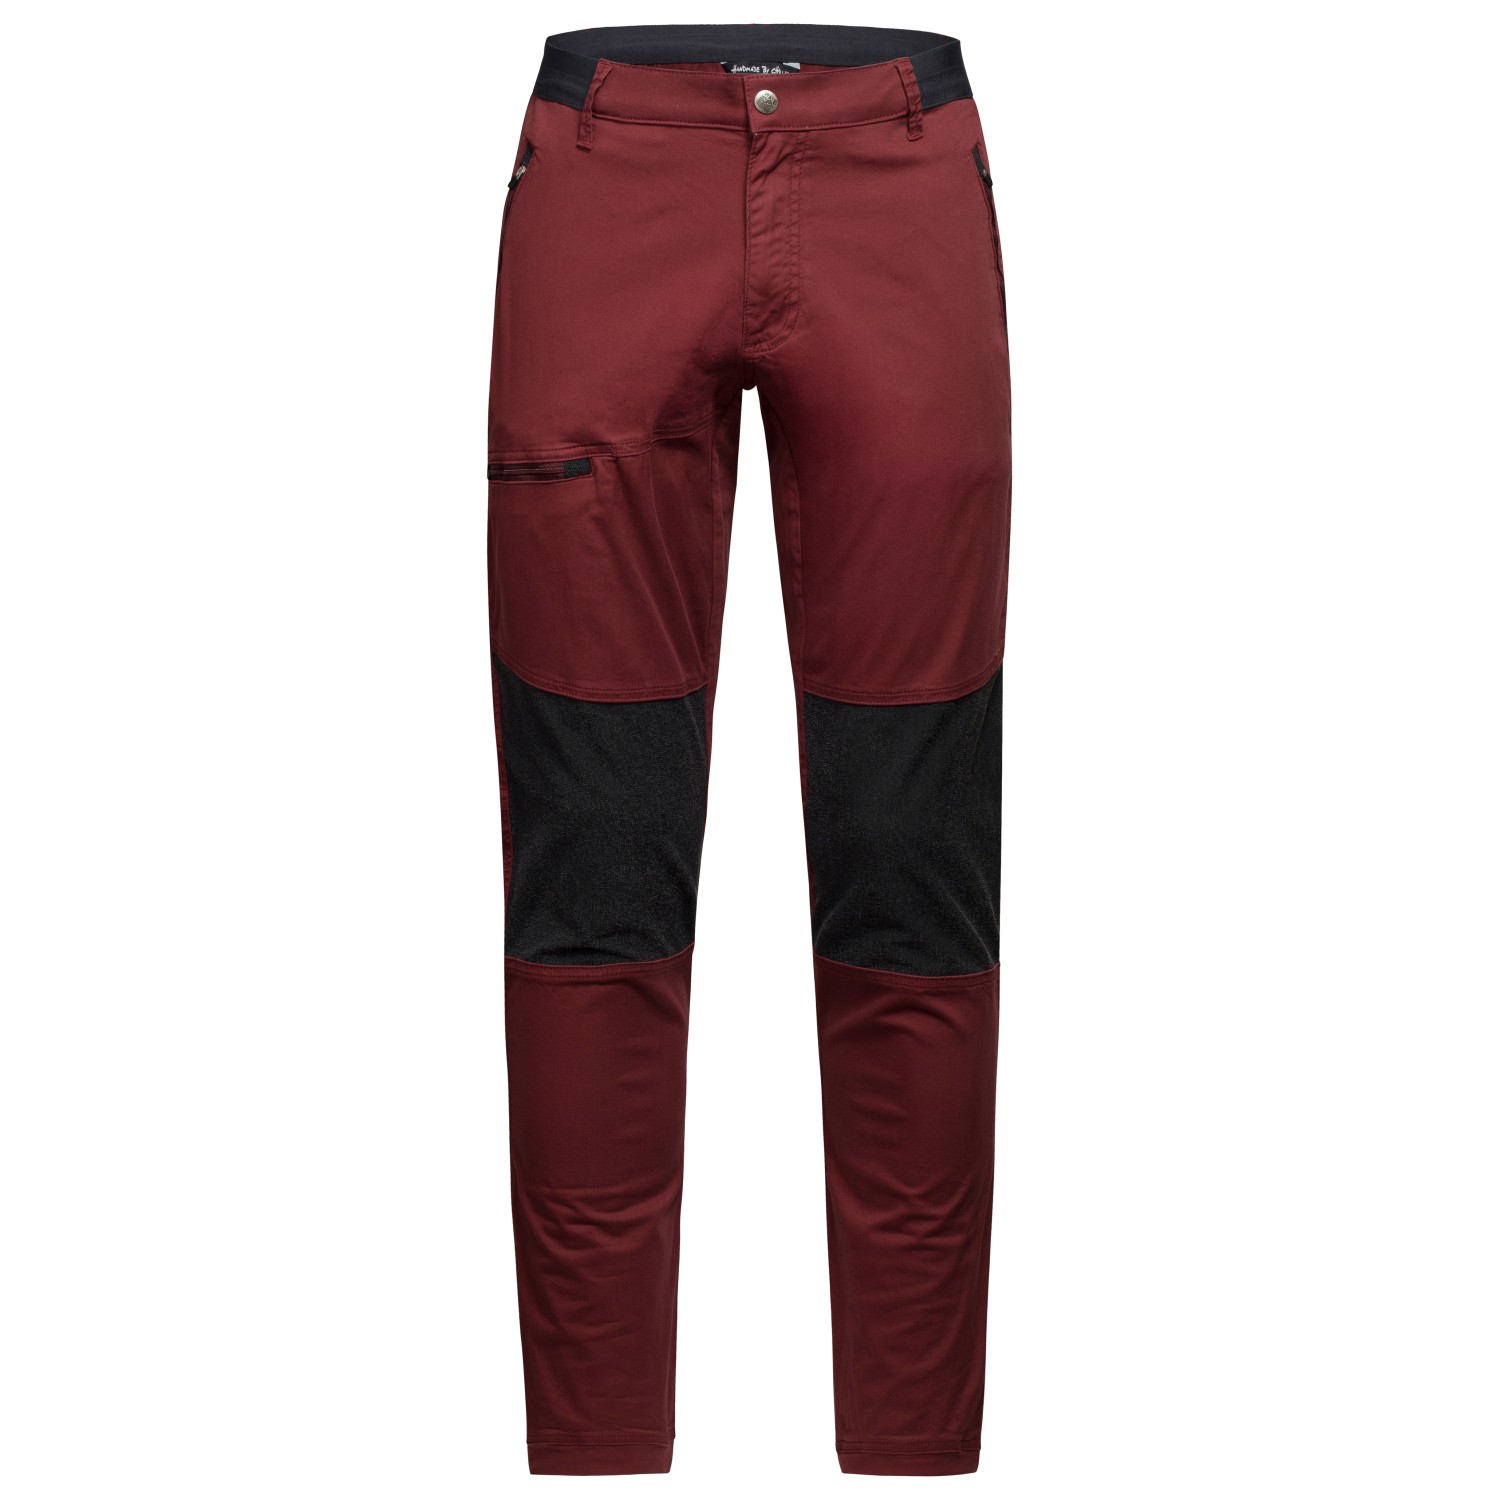 Альпинистские штаны Chillaz Direttissima Pant, цвет Dark Red chillaz брюки elias 3 4 муж xl denim dark blue